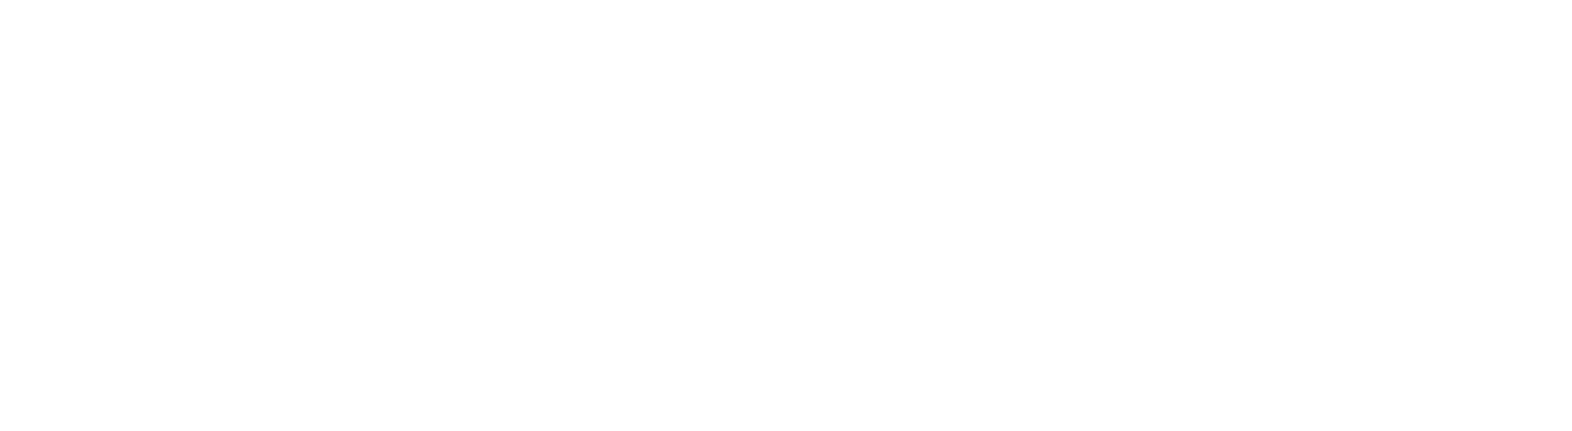 Alkaline Water Company logo large for dark backgrounds (transparent PNG)